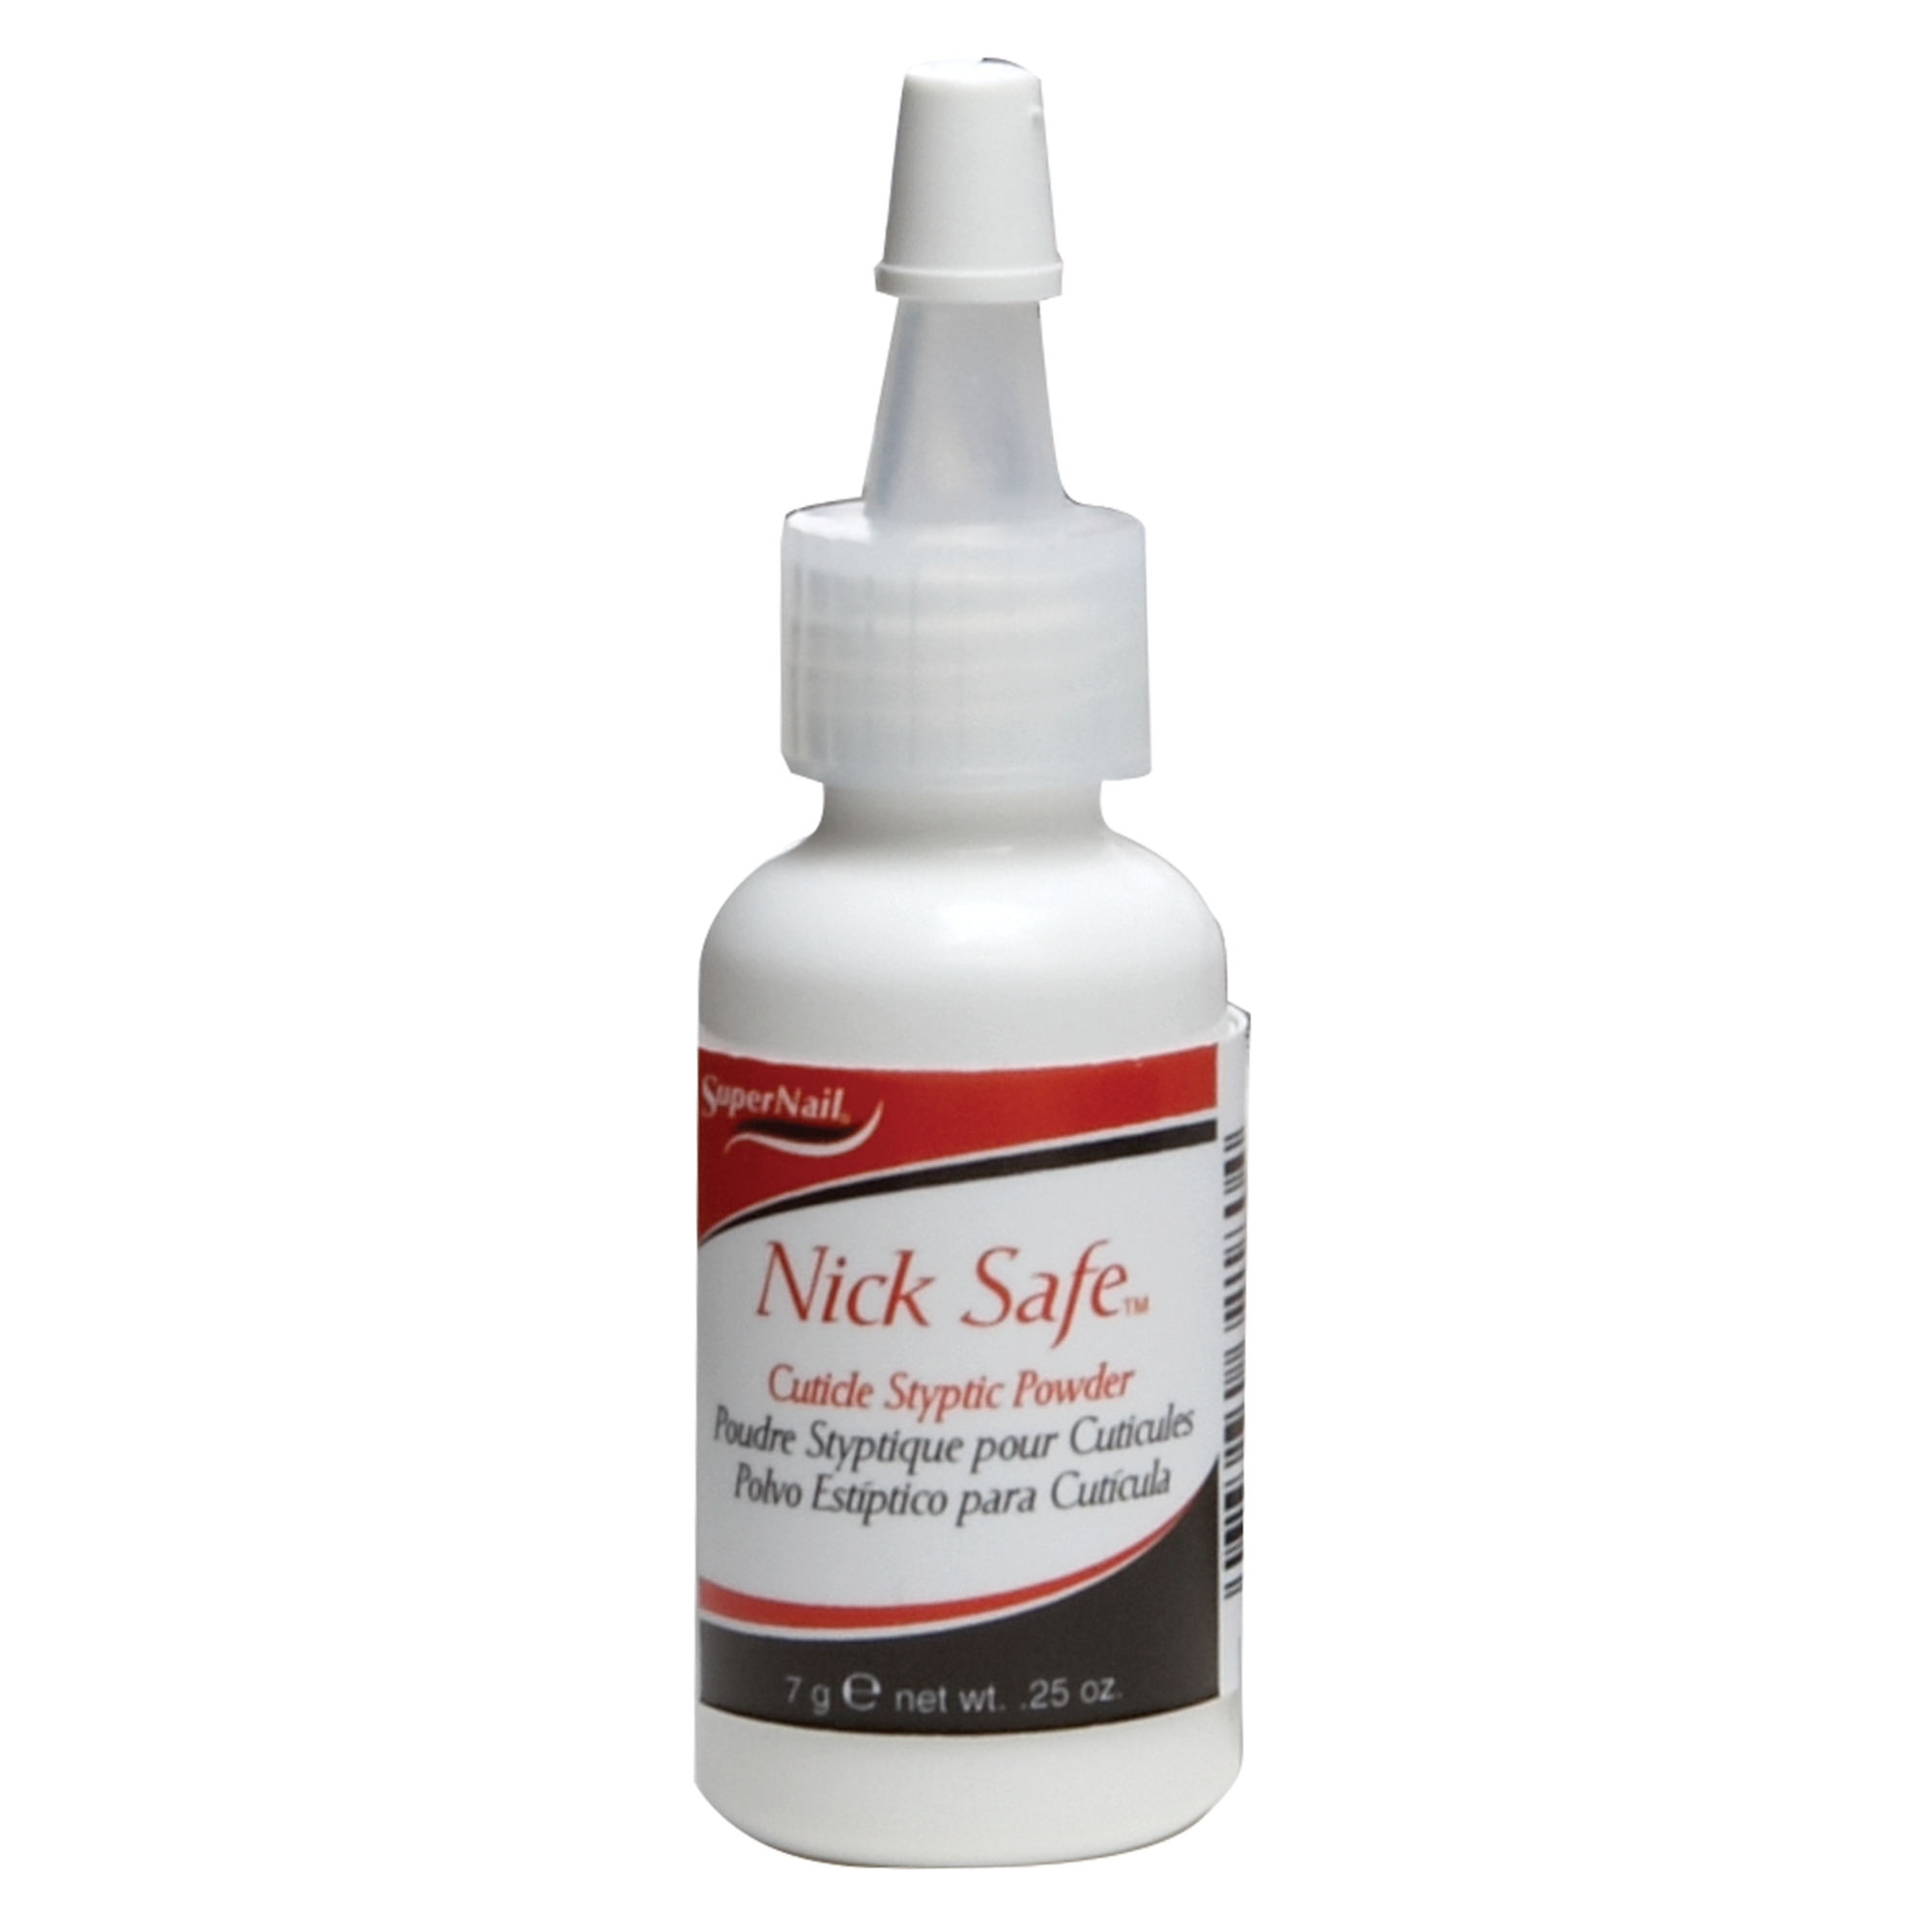 Nick Safe Cuticle Styptic Powder